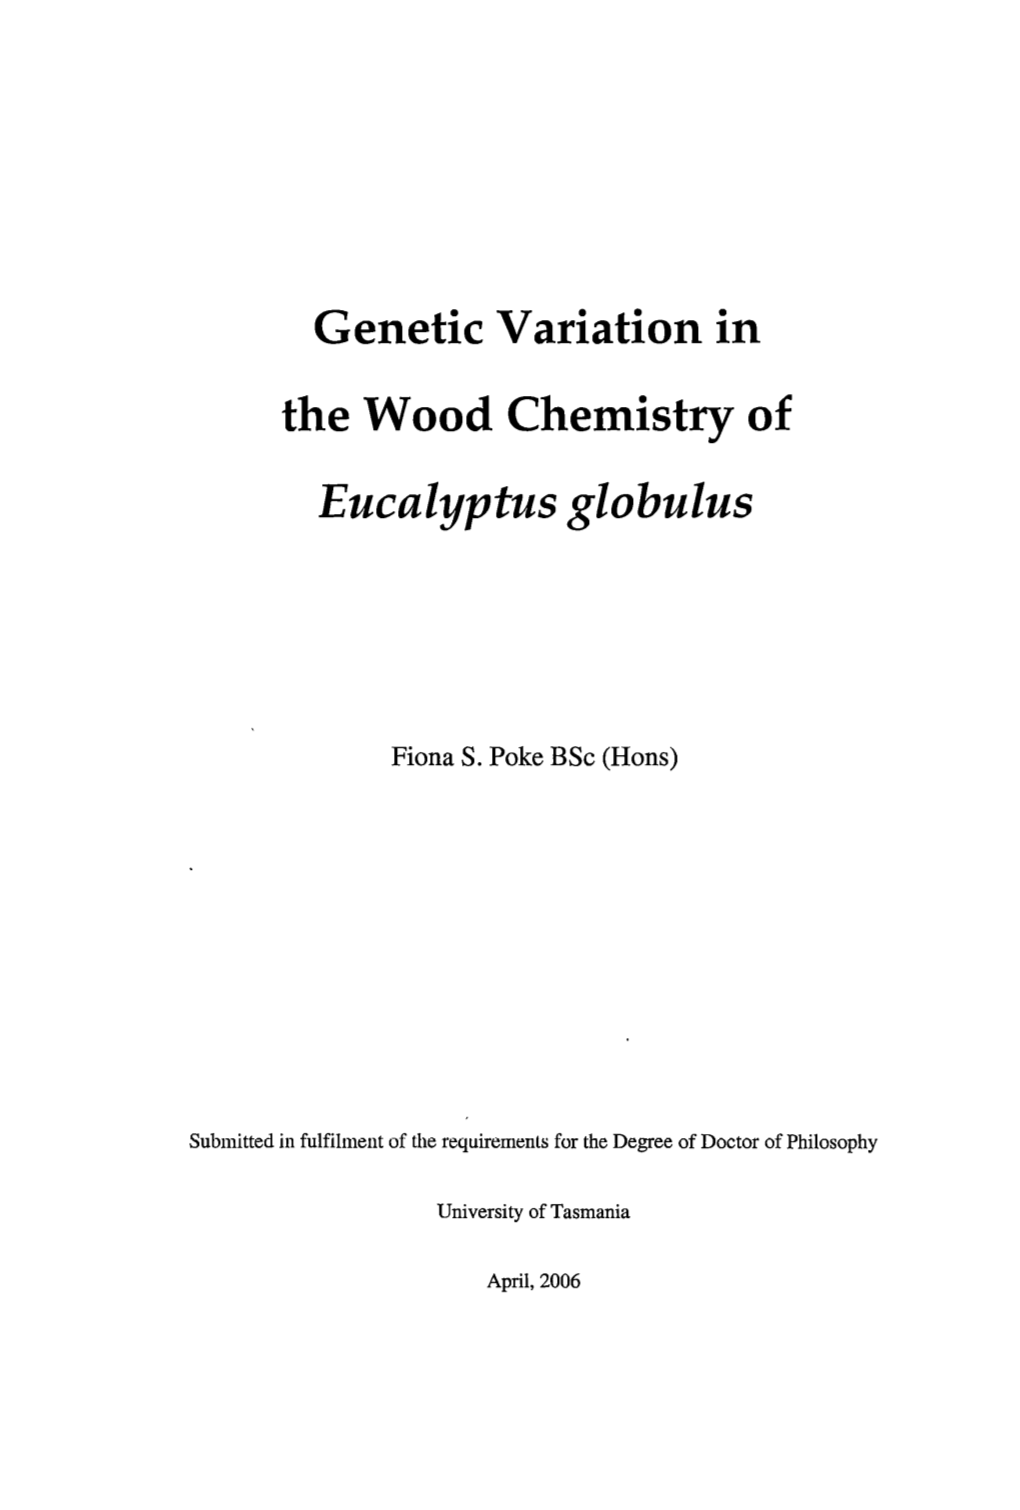 Genetic Variation in Wood Chemistry of Eucalyptus Globulus